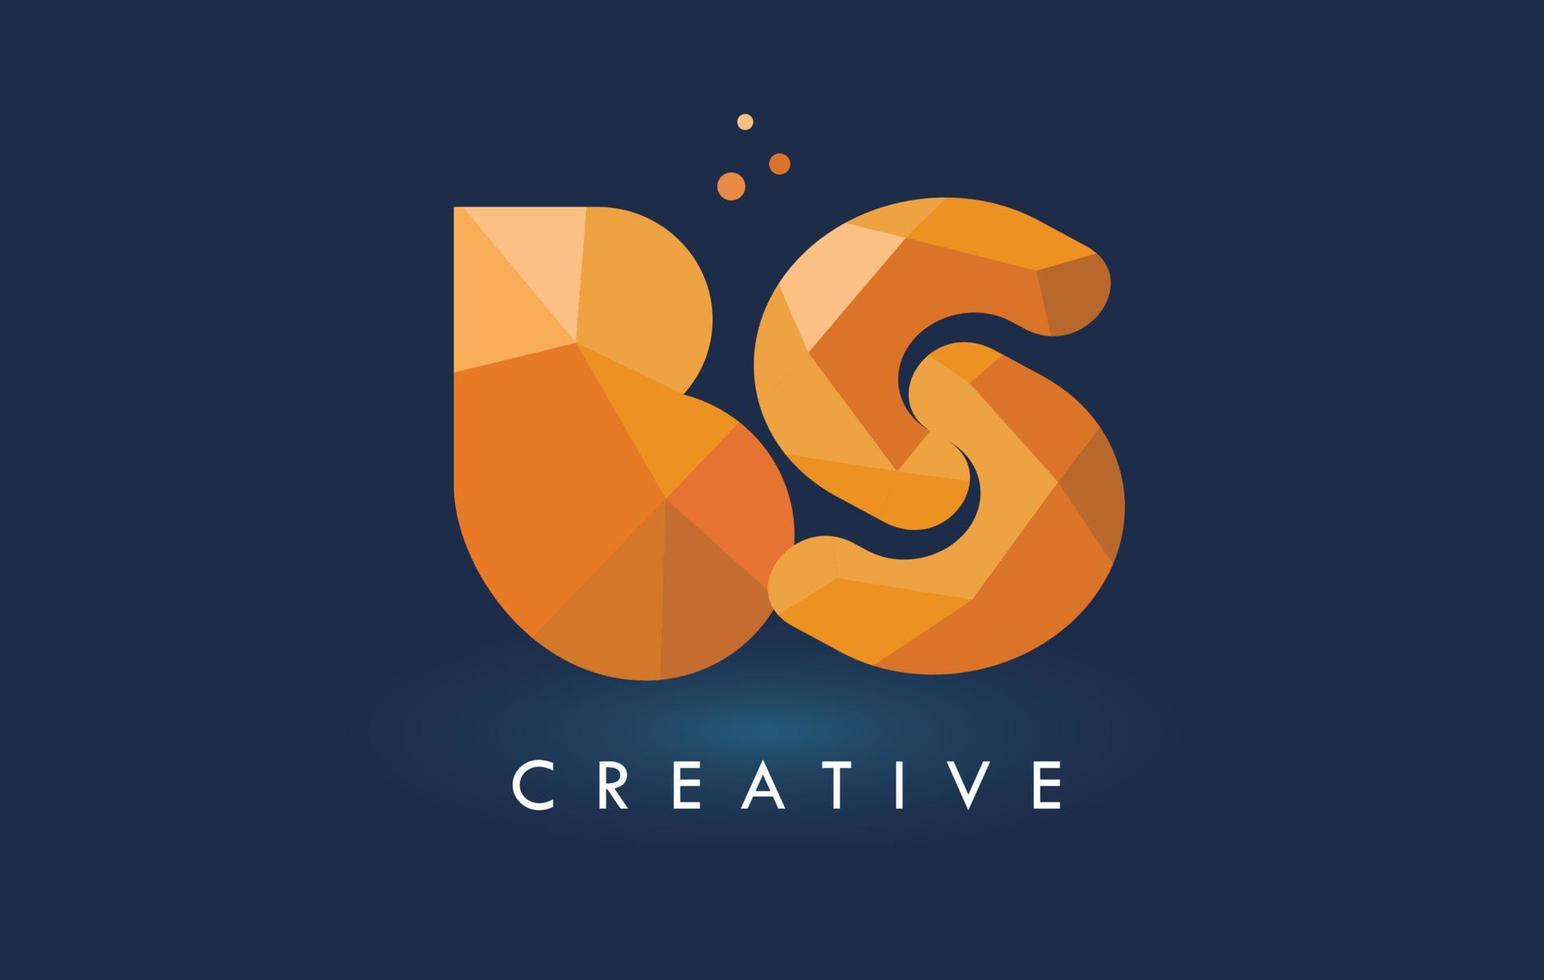 bs-Buchstabe mit Origami-Dreieck-Logo. kreatives gelb-oranges Origami-Design. vektor